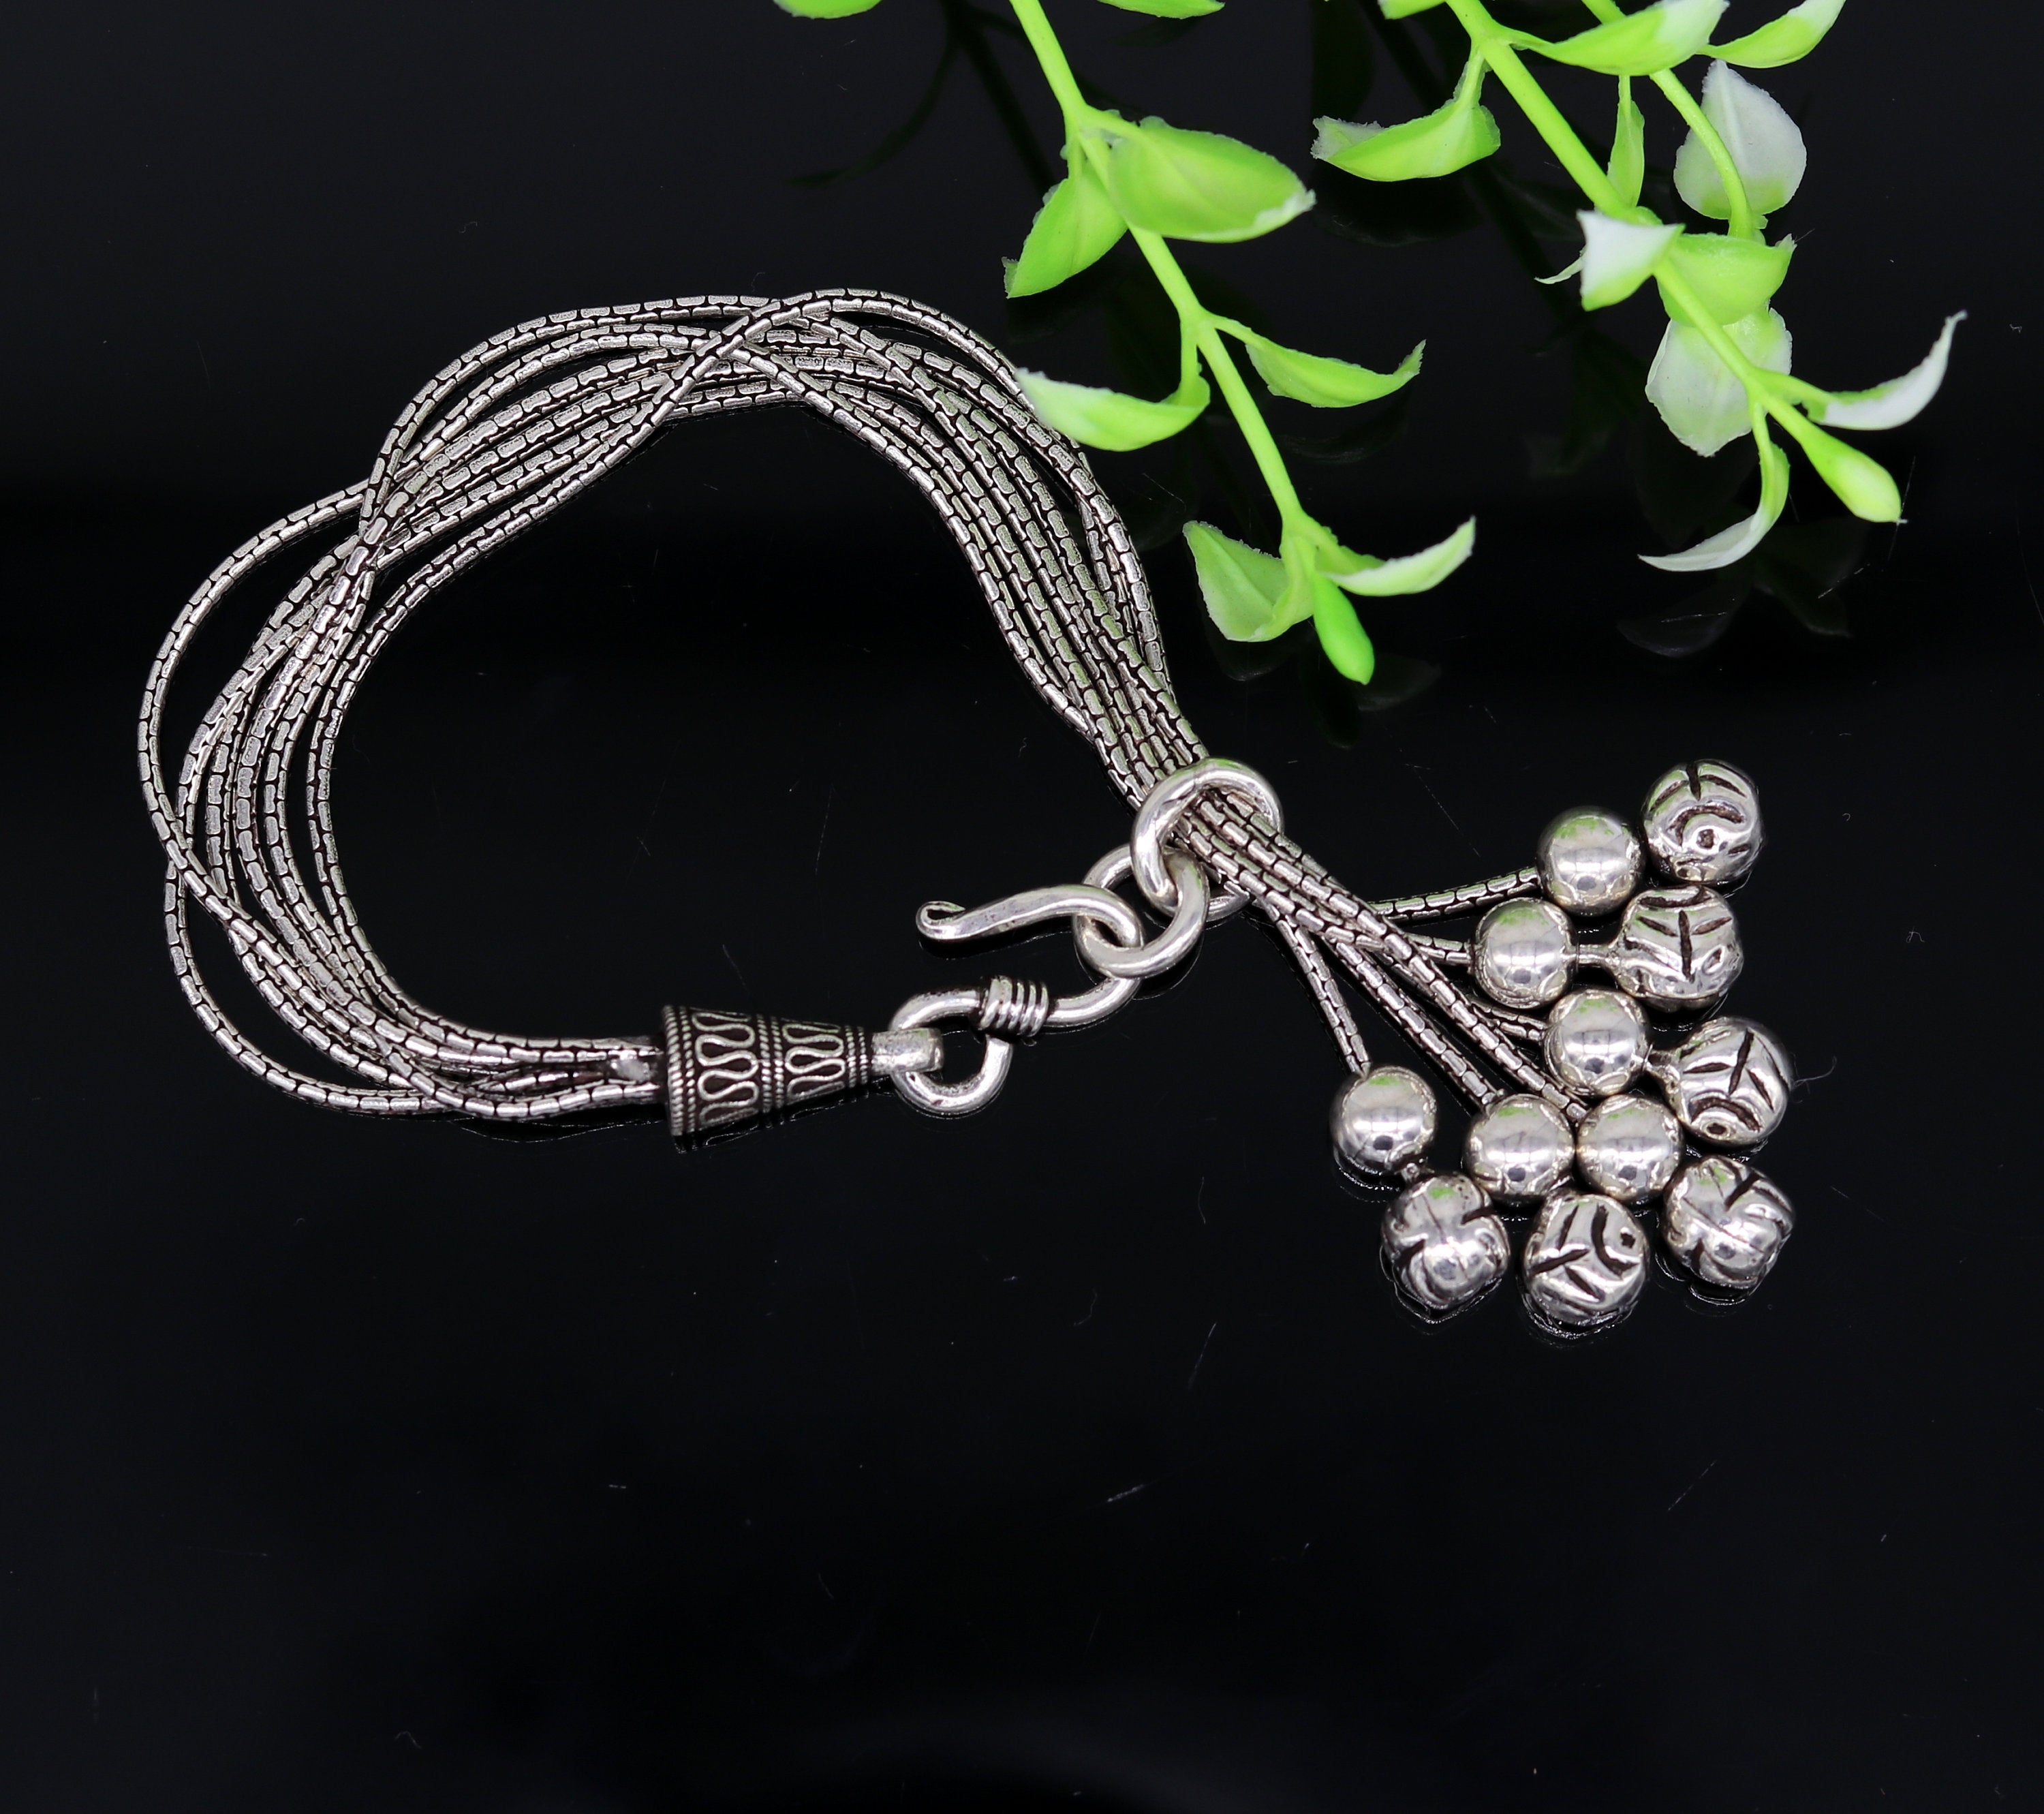 Buy NEVI Stainless Steel Multi Strand Chain Charm Bracelet Jewellery for  Women & Girls (Silver) at Amazon.in